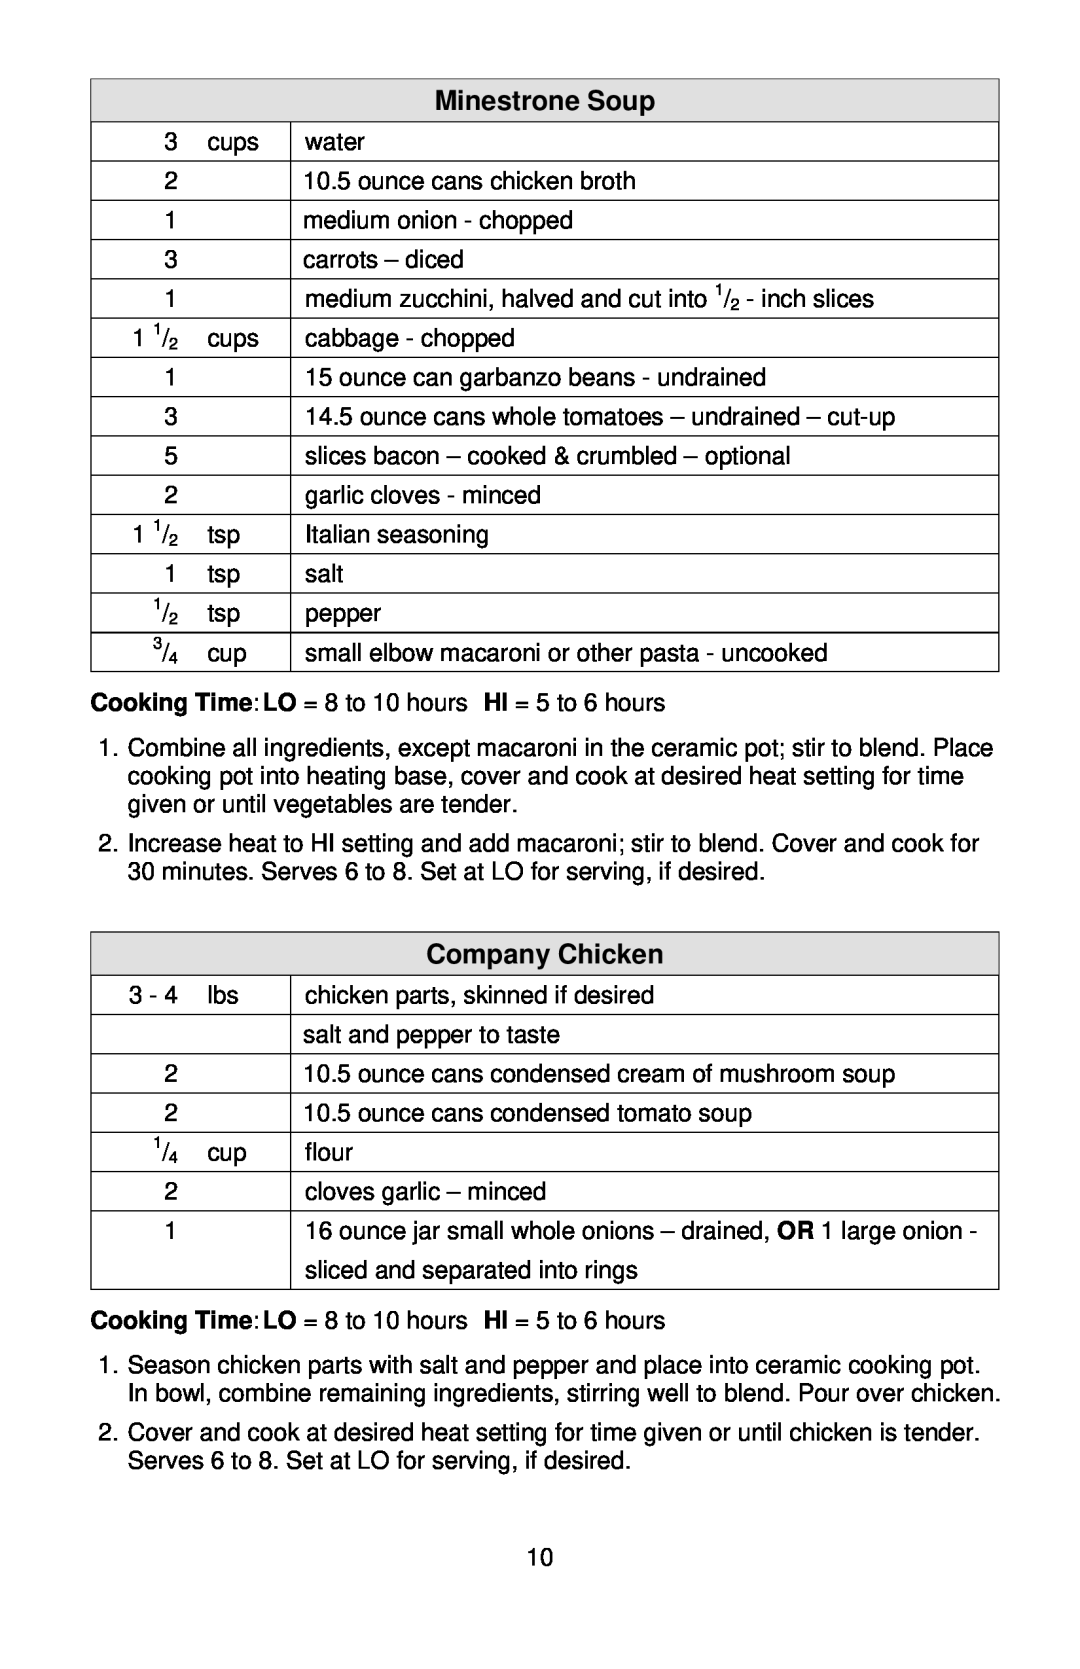 West Bend 6-QUART ELECTRONIC CROCKERYTM COOKER instruction manual Minestrone Soup, Company Chicken 